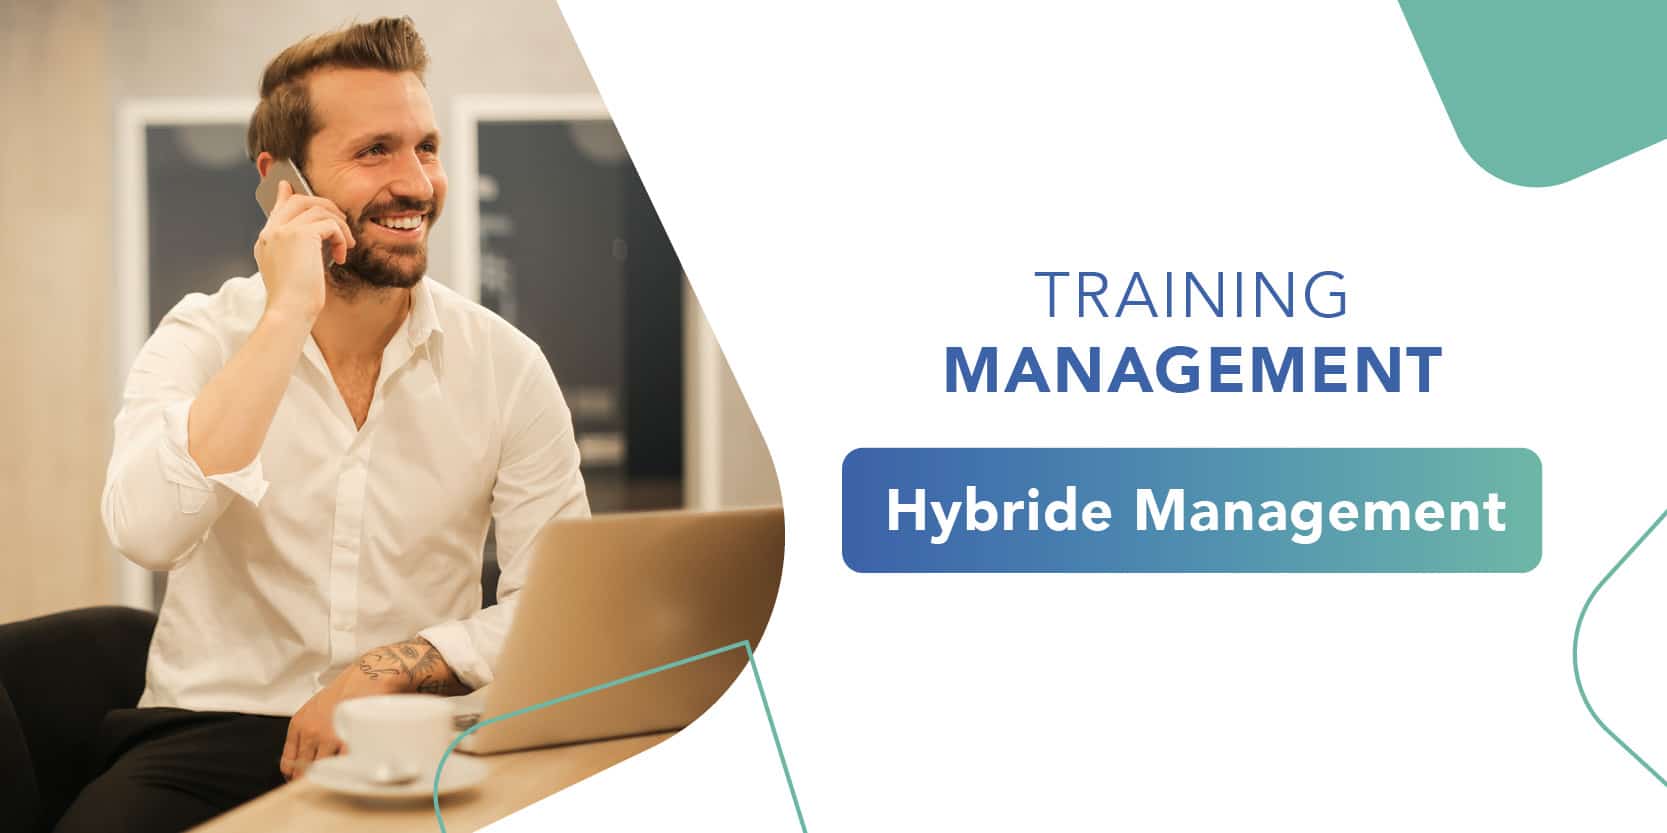 Hybrid management